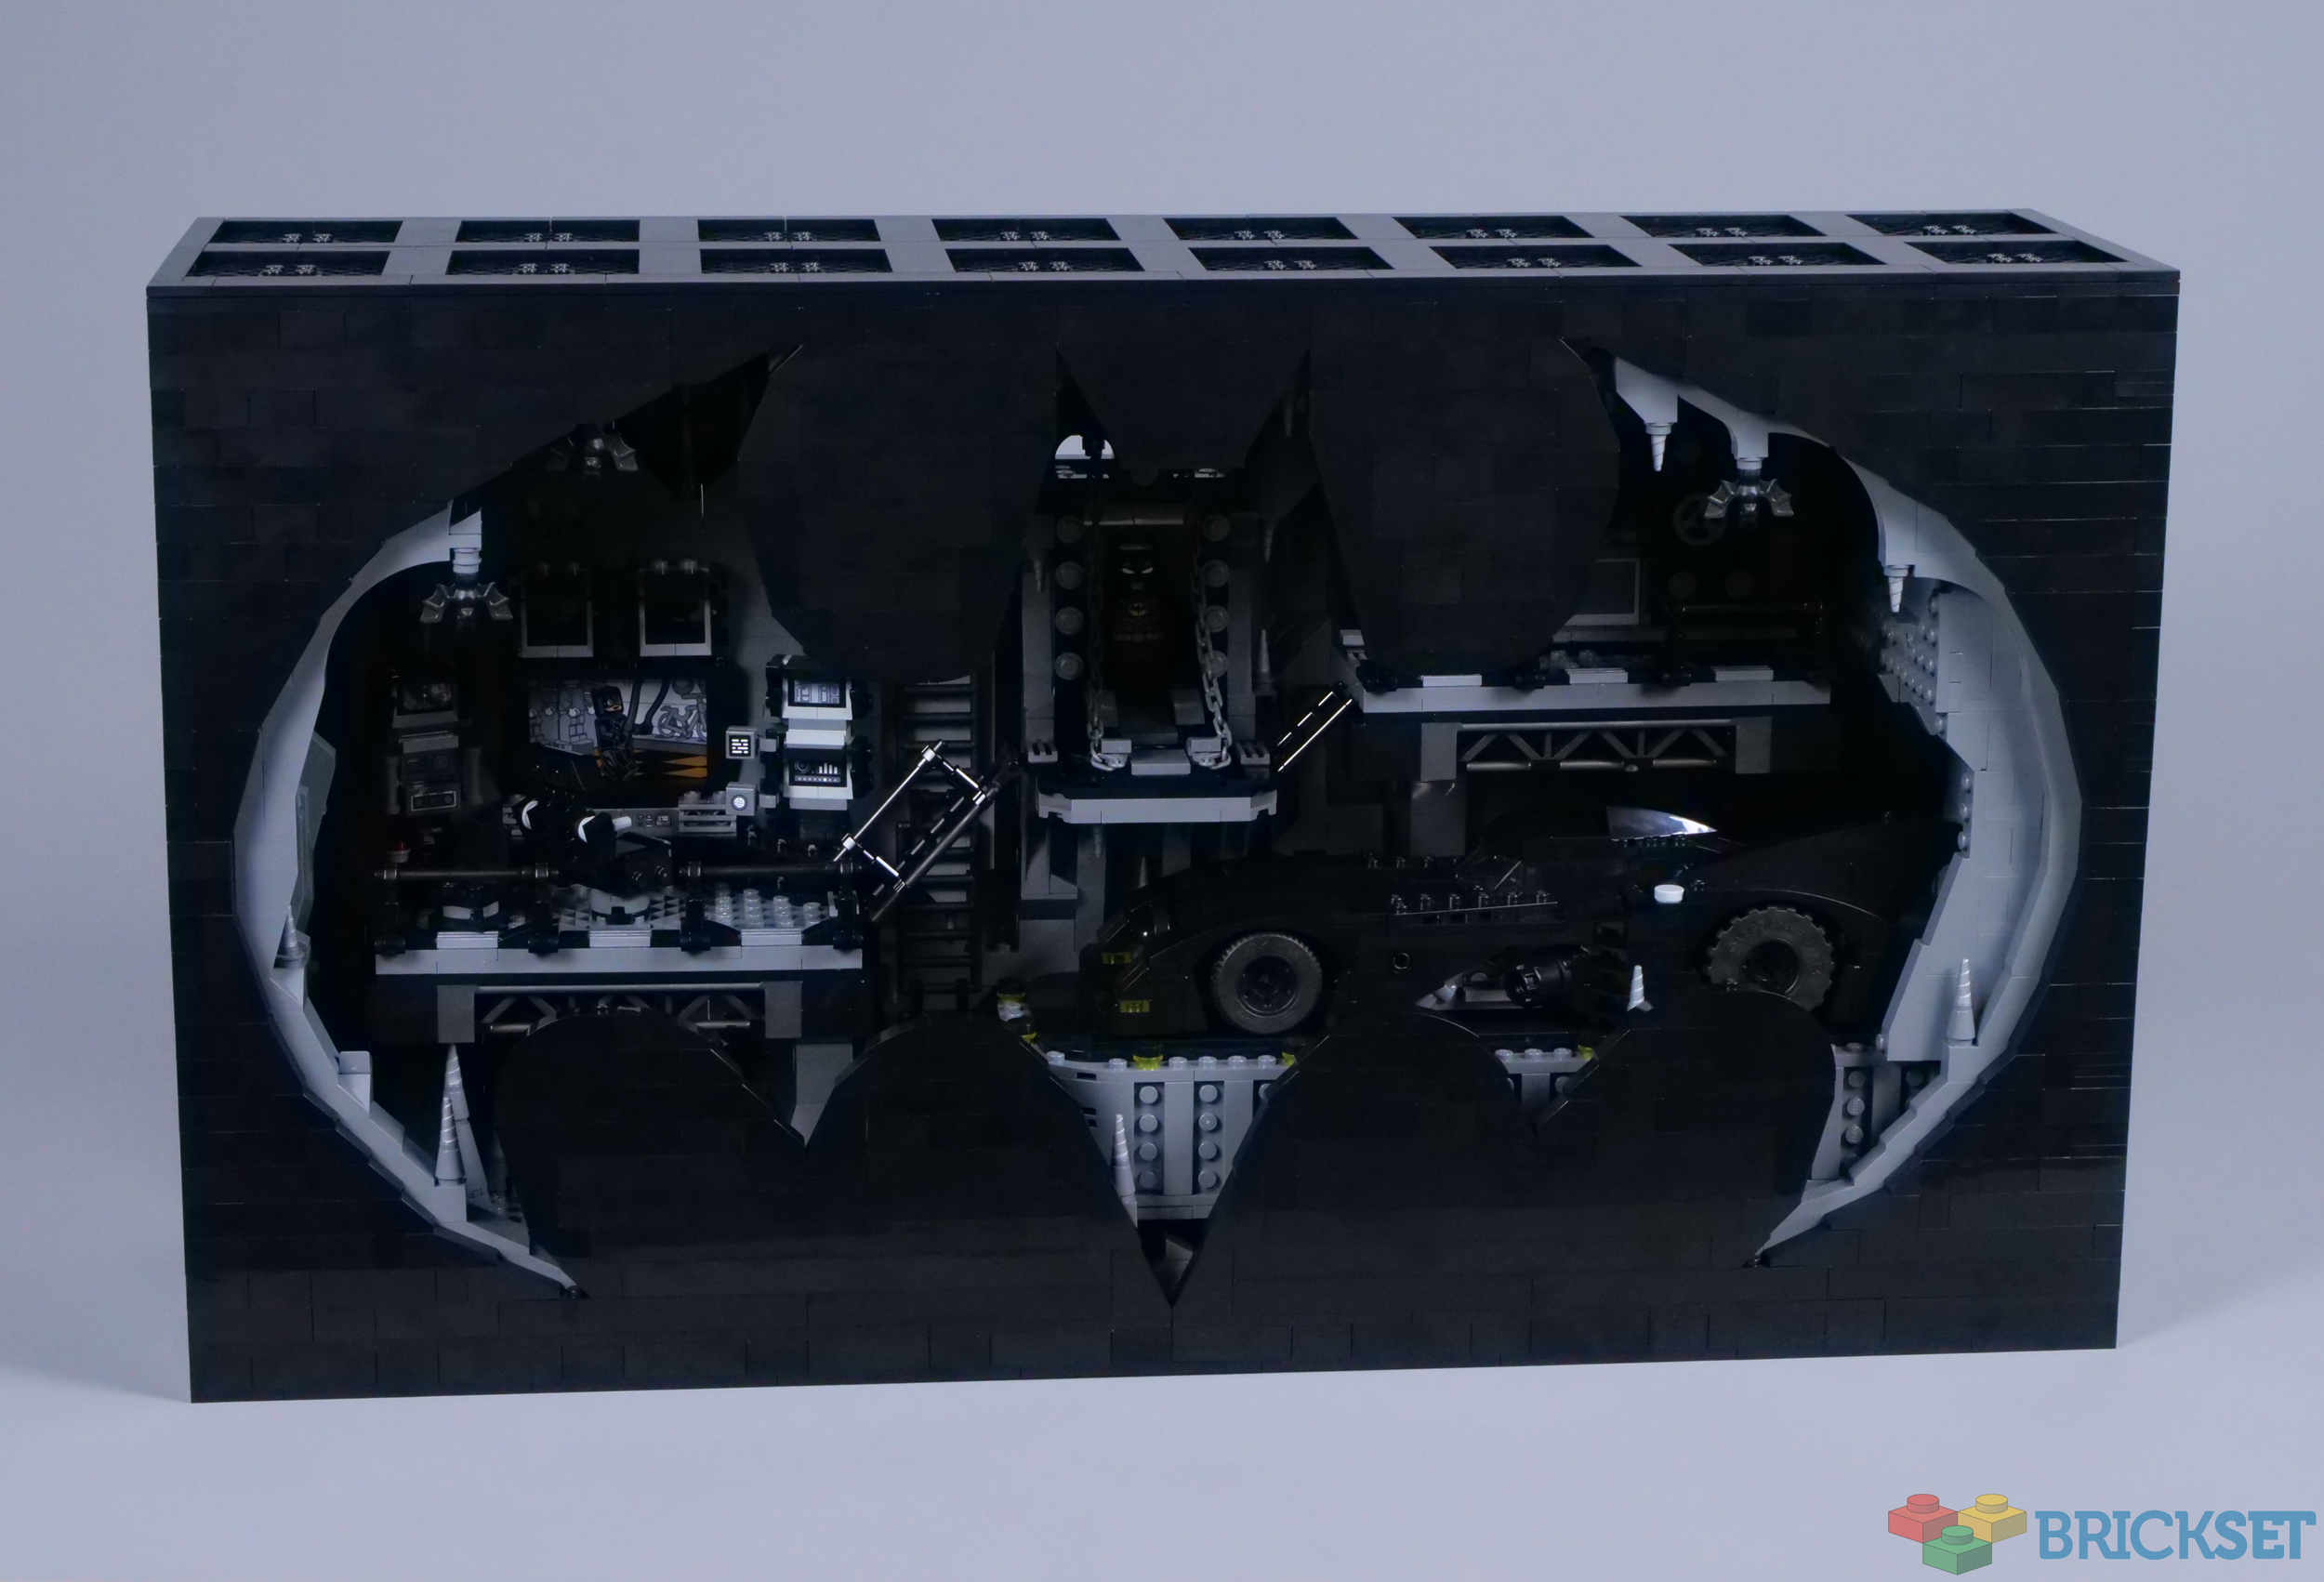 LEGO's BATMAN RETURNS Batcave Shadow Box Set Delivers on the